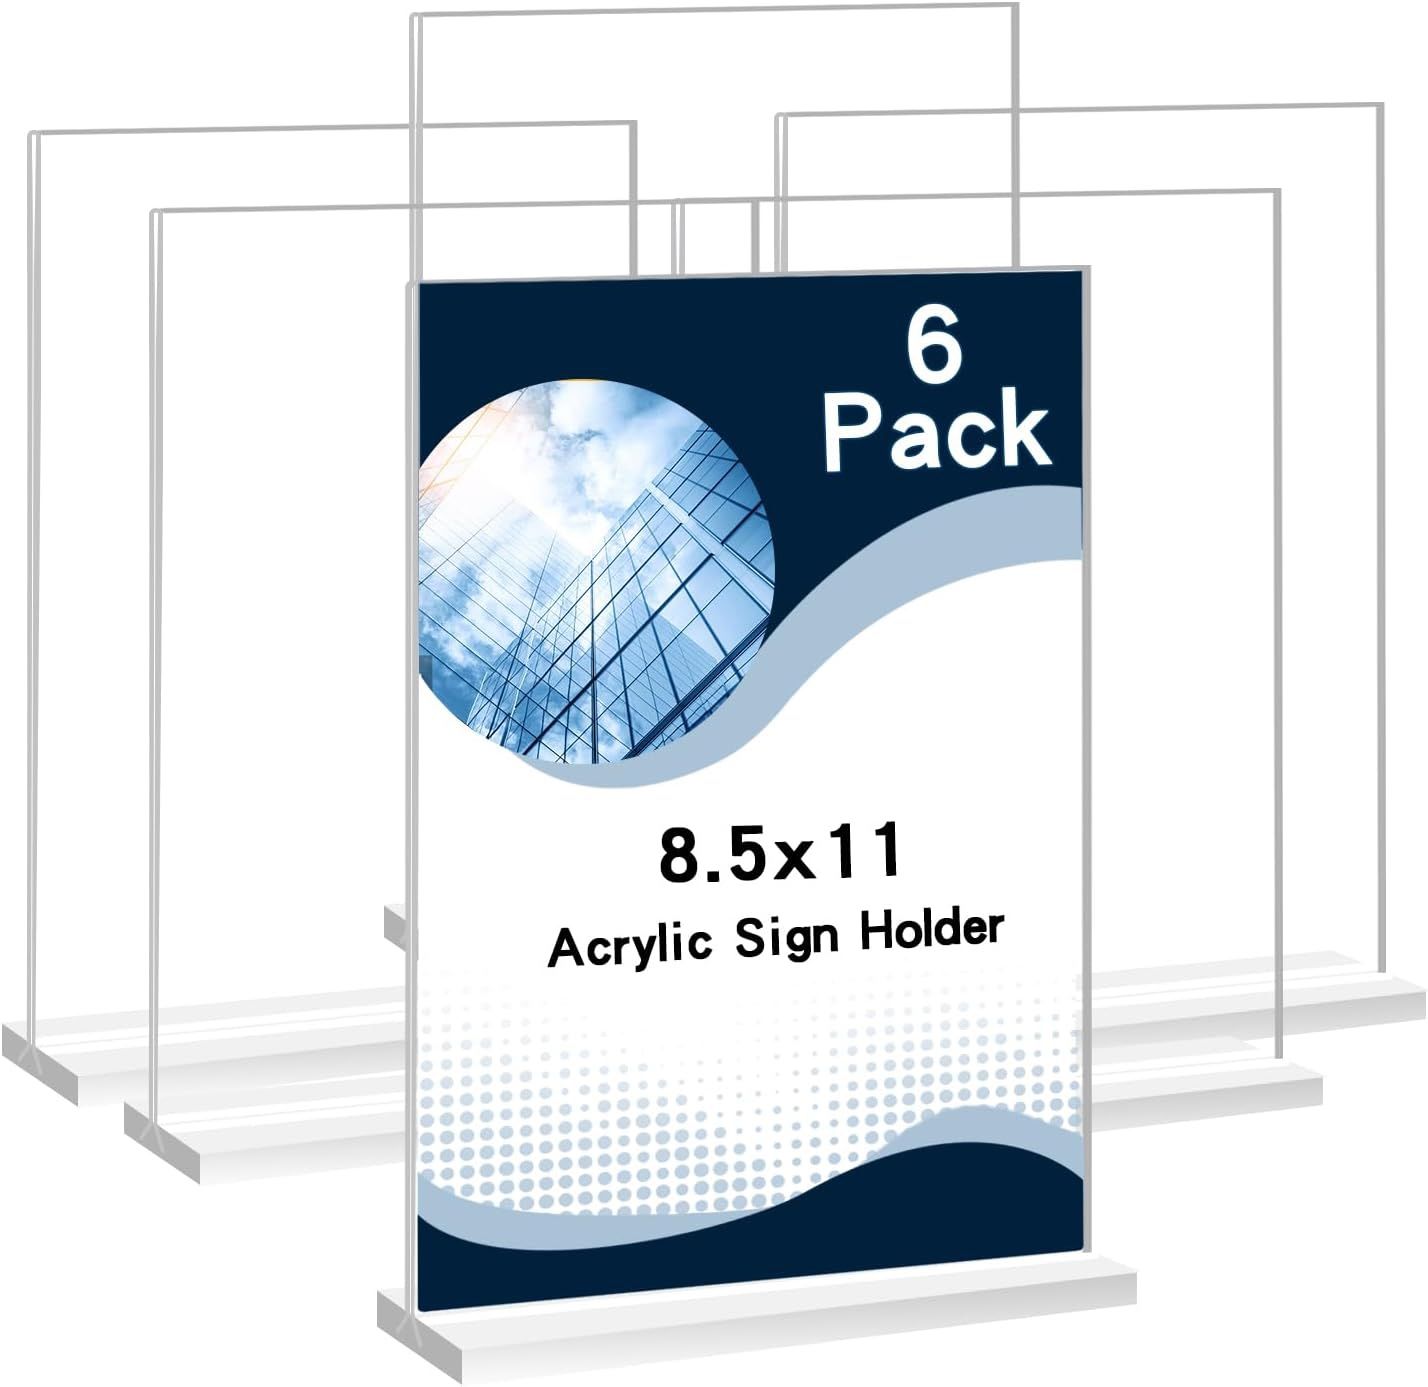 6 Pack Acrylic Sign Holder 8.5 x 11,Acrylic Display Stands Acrylic Picture Frame Acrylic Stands for Display Paper Holder Stand for Desk Acrylic Table 